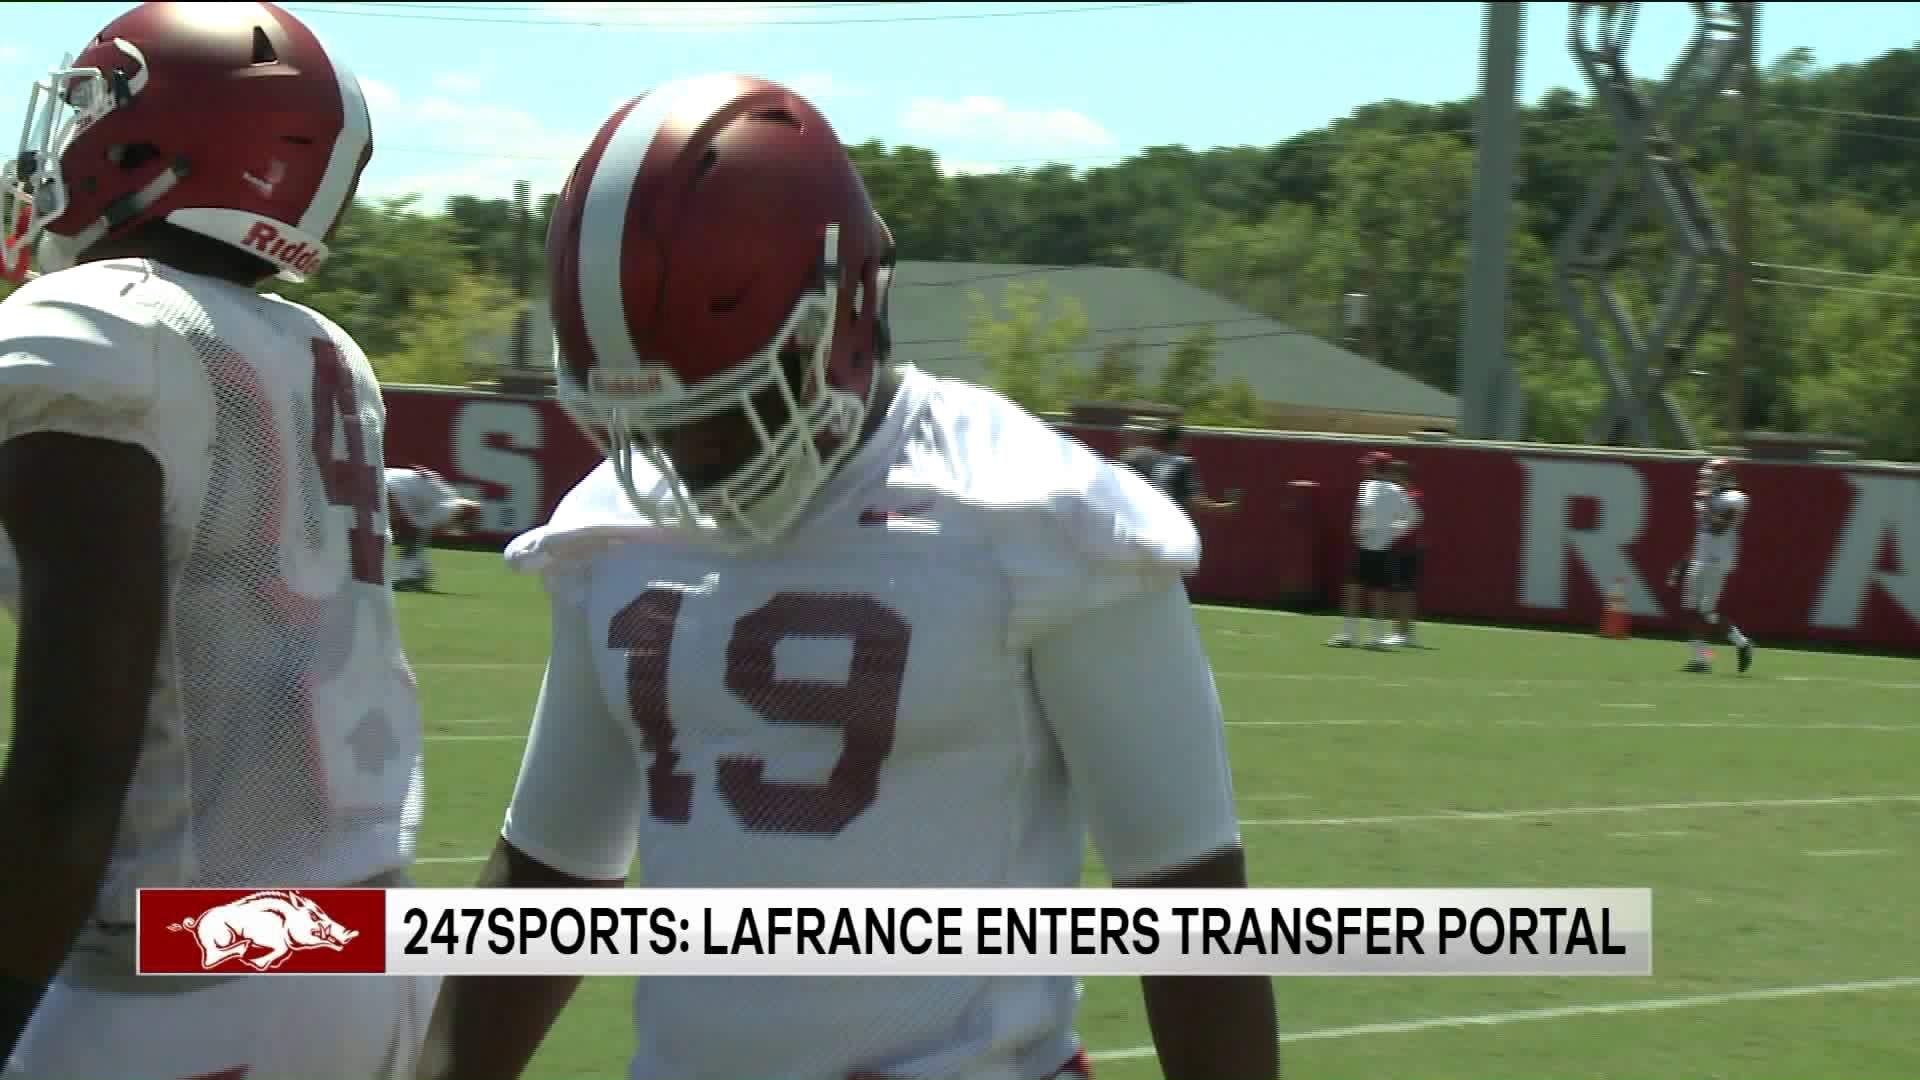 LaFrance enters transfer portal